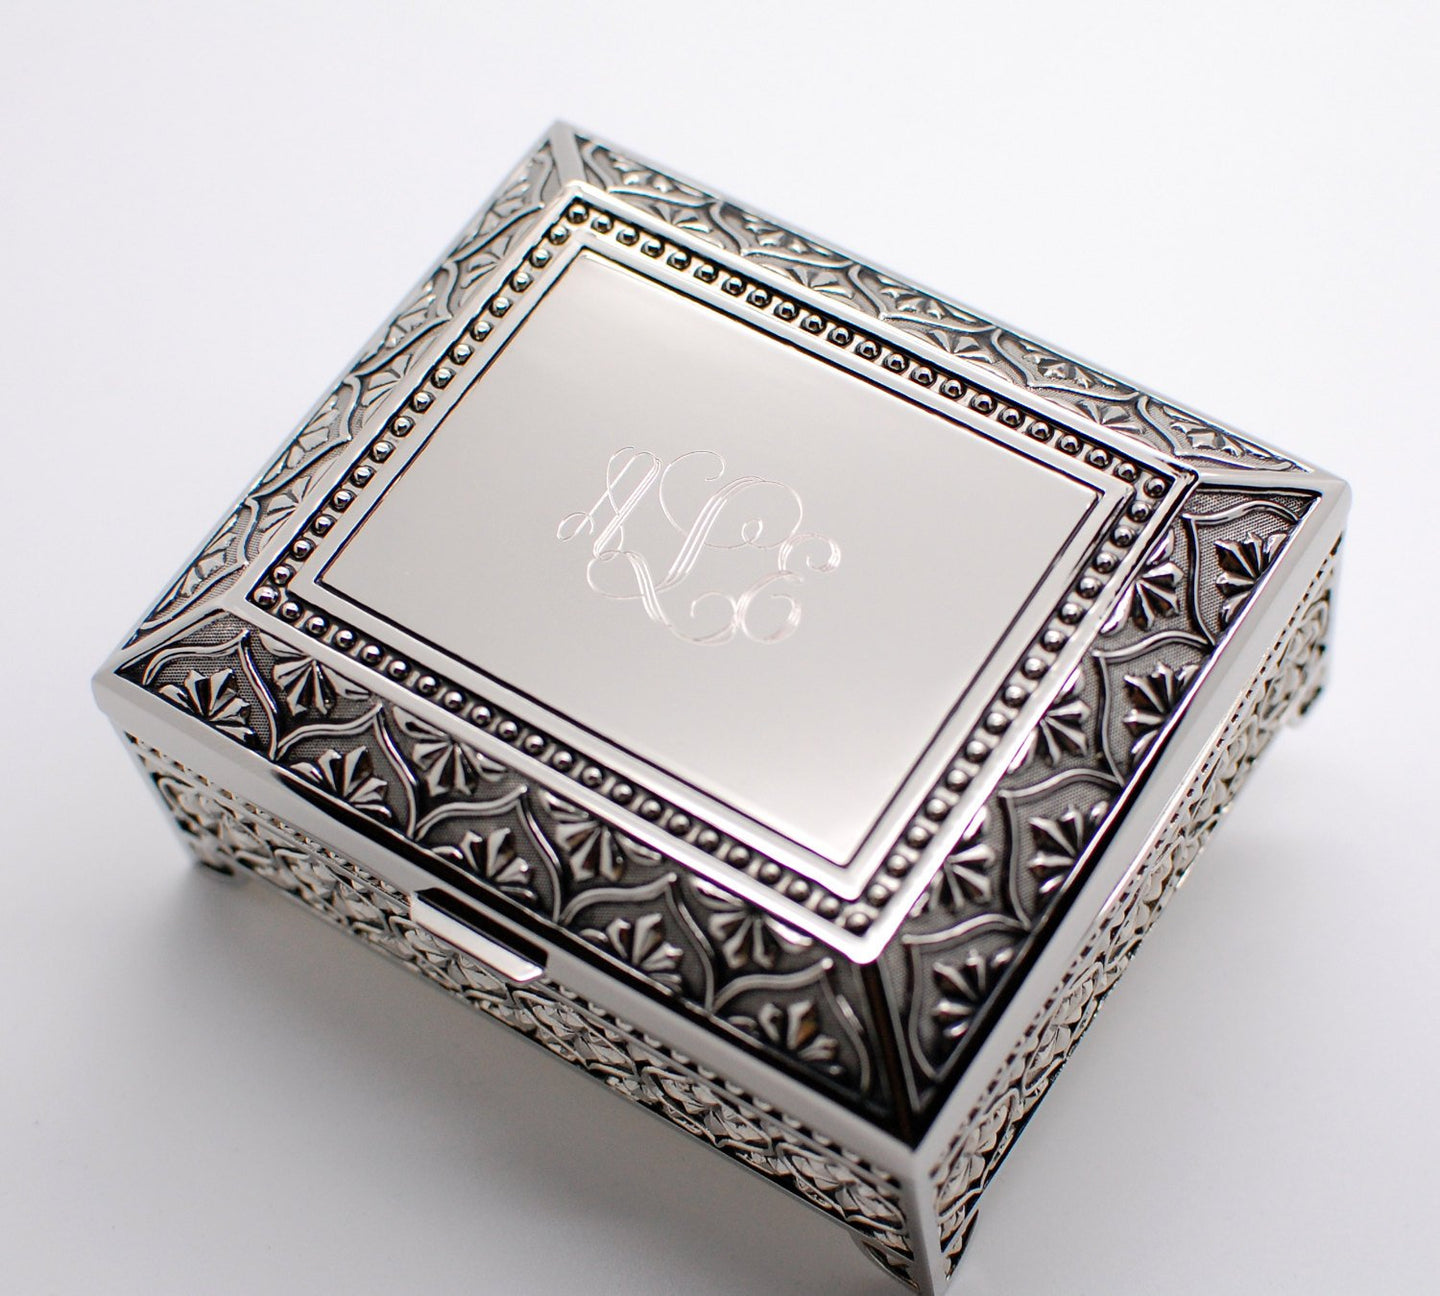 Monogrammed jewelry box - personalized jewelry box 4 Inch - Engraved keepsake box - Silver trinket box for wedding bridesmaid flower girls